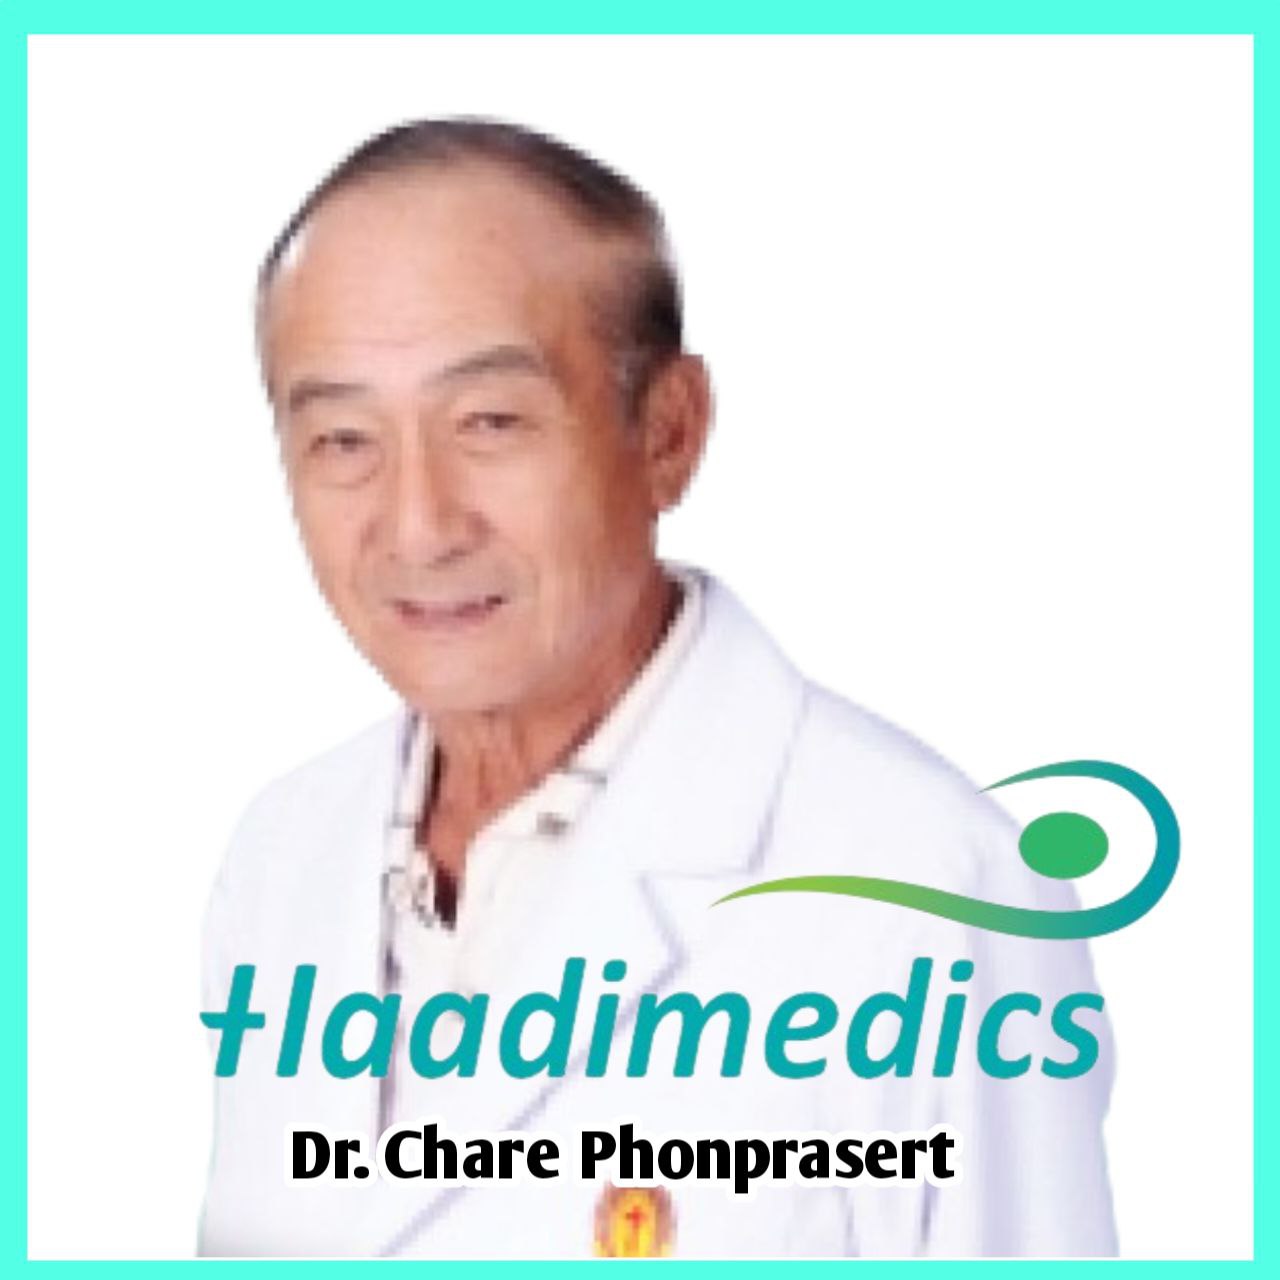 Dr. Chare Phonprasert